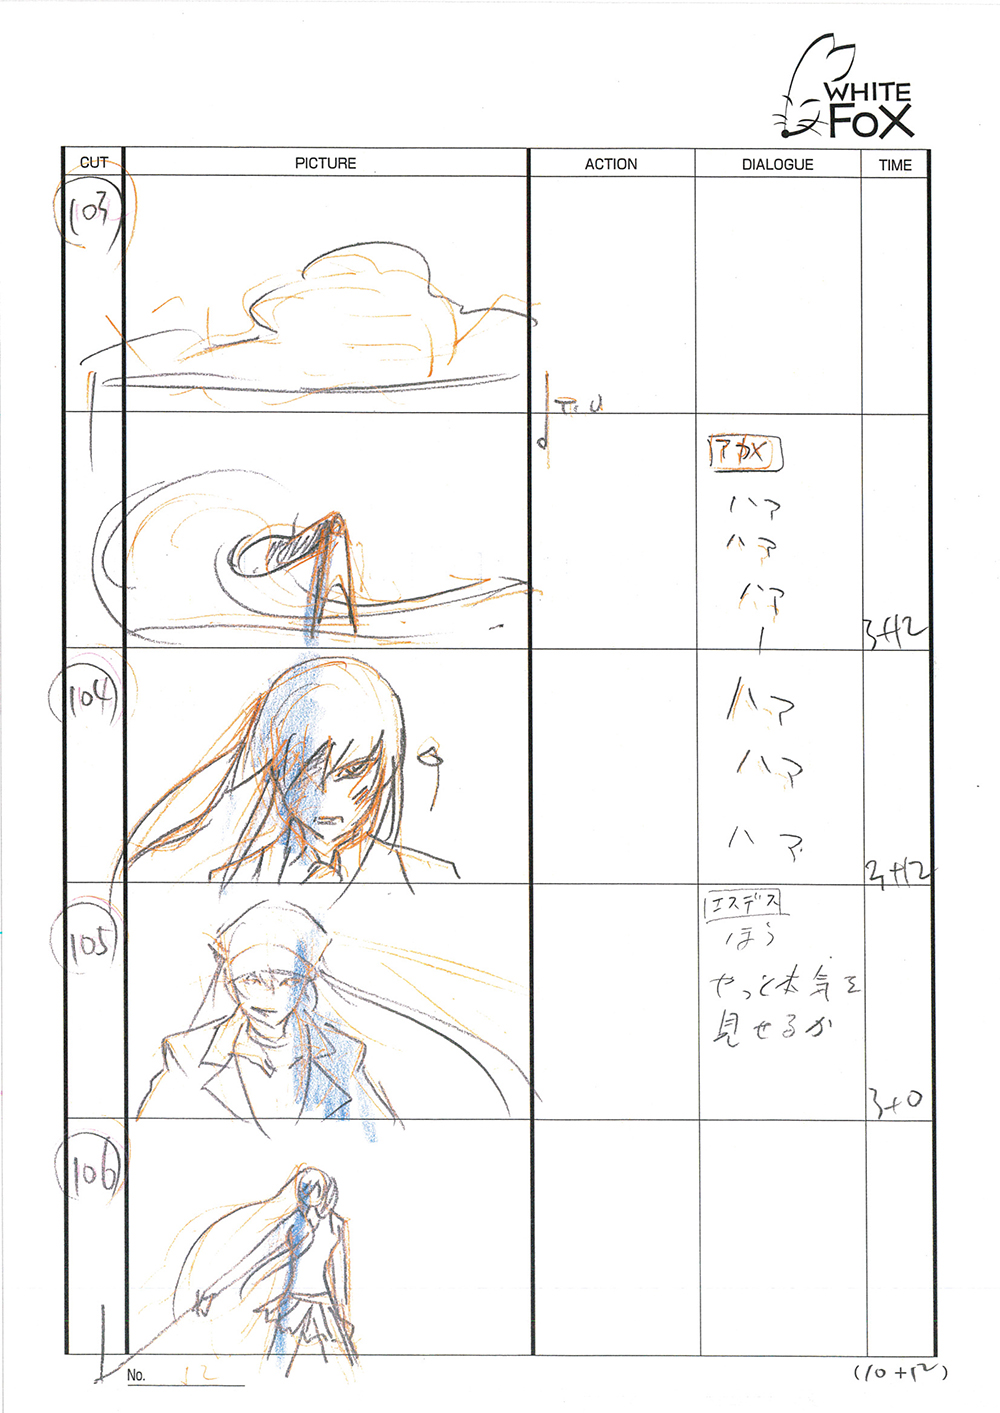 Akame ga Kill Episode 24 Storyboard Leak 054